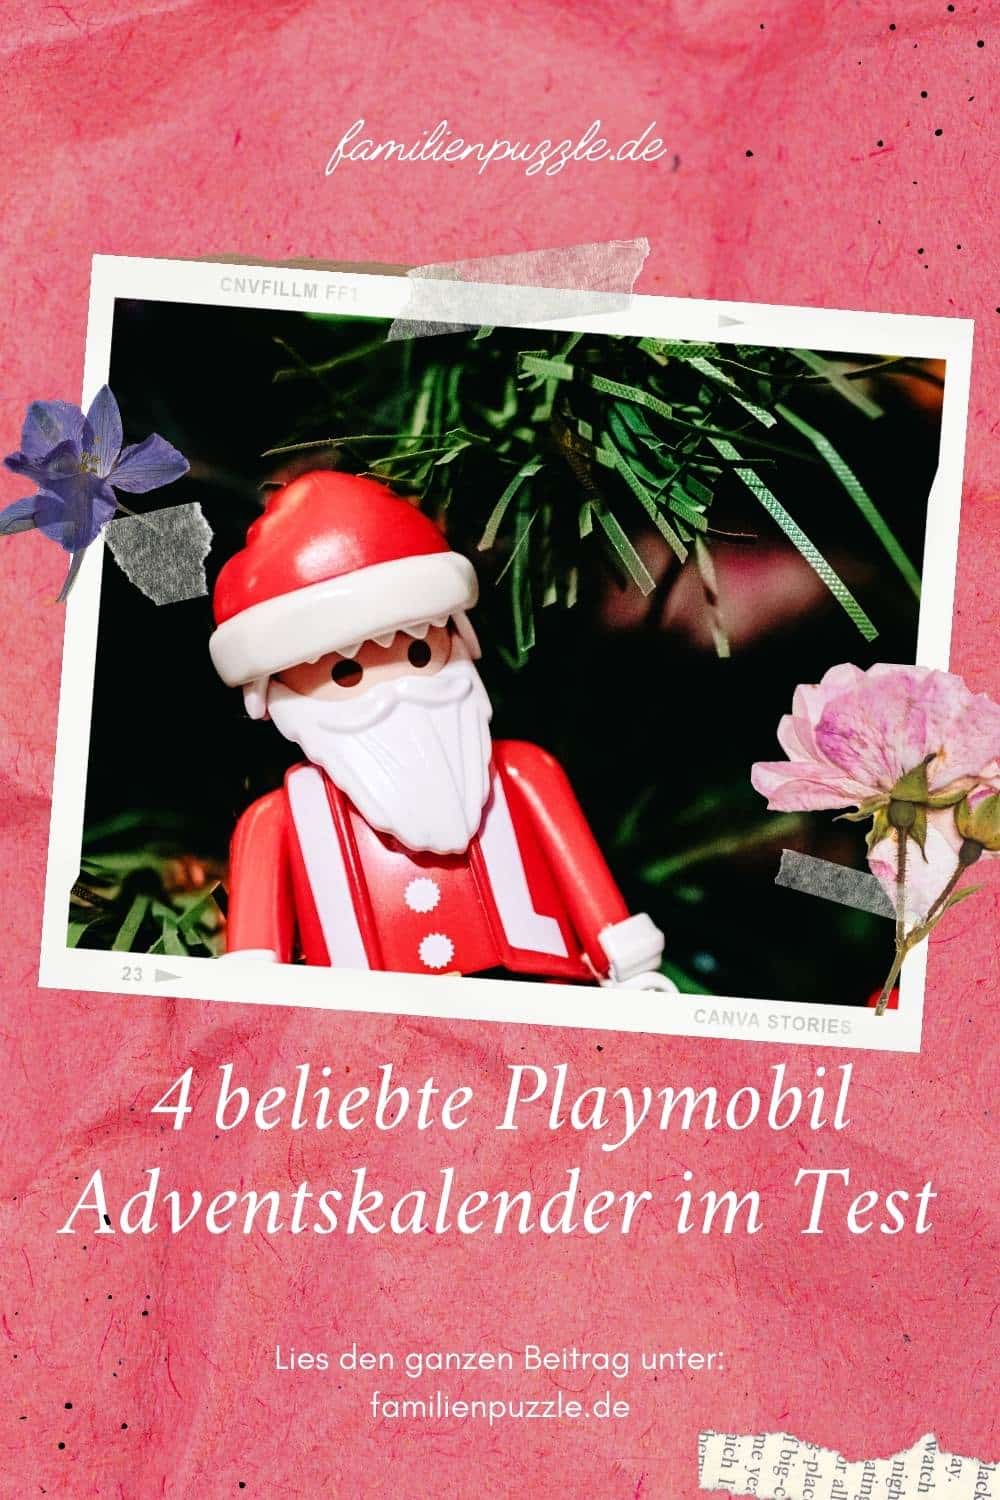 4 Playmobil Adventskalender im Test.